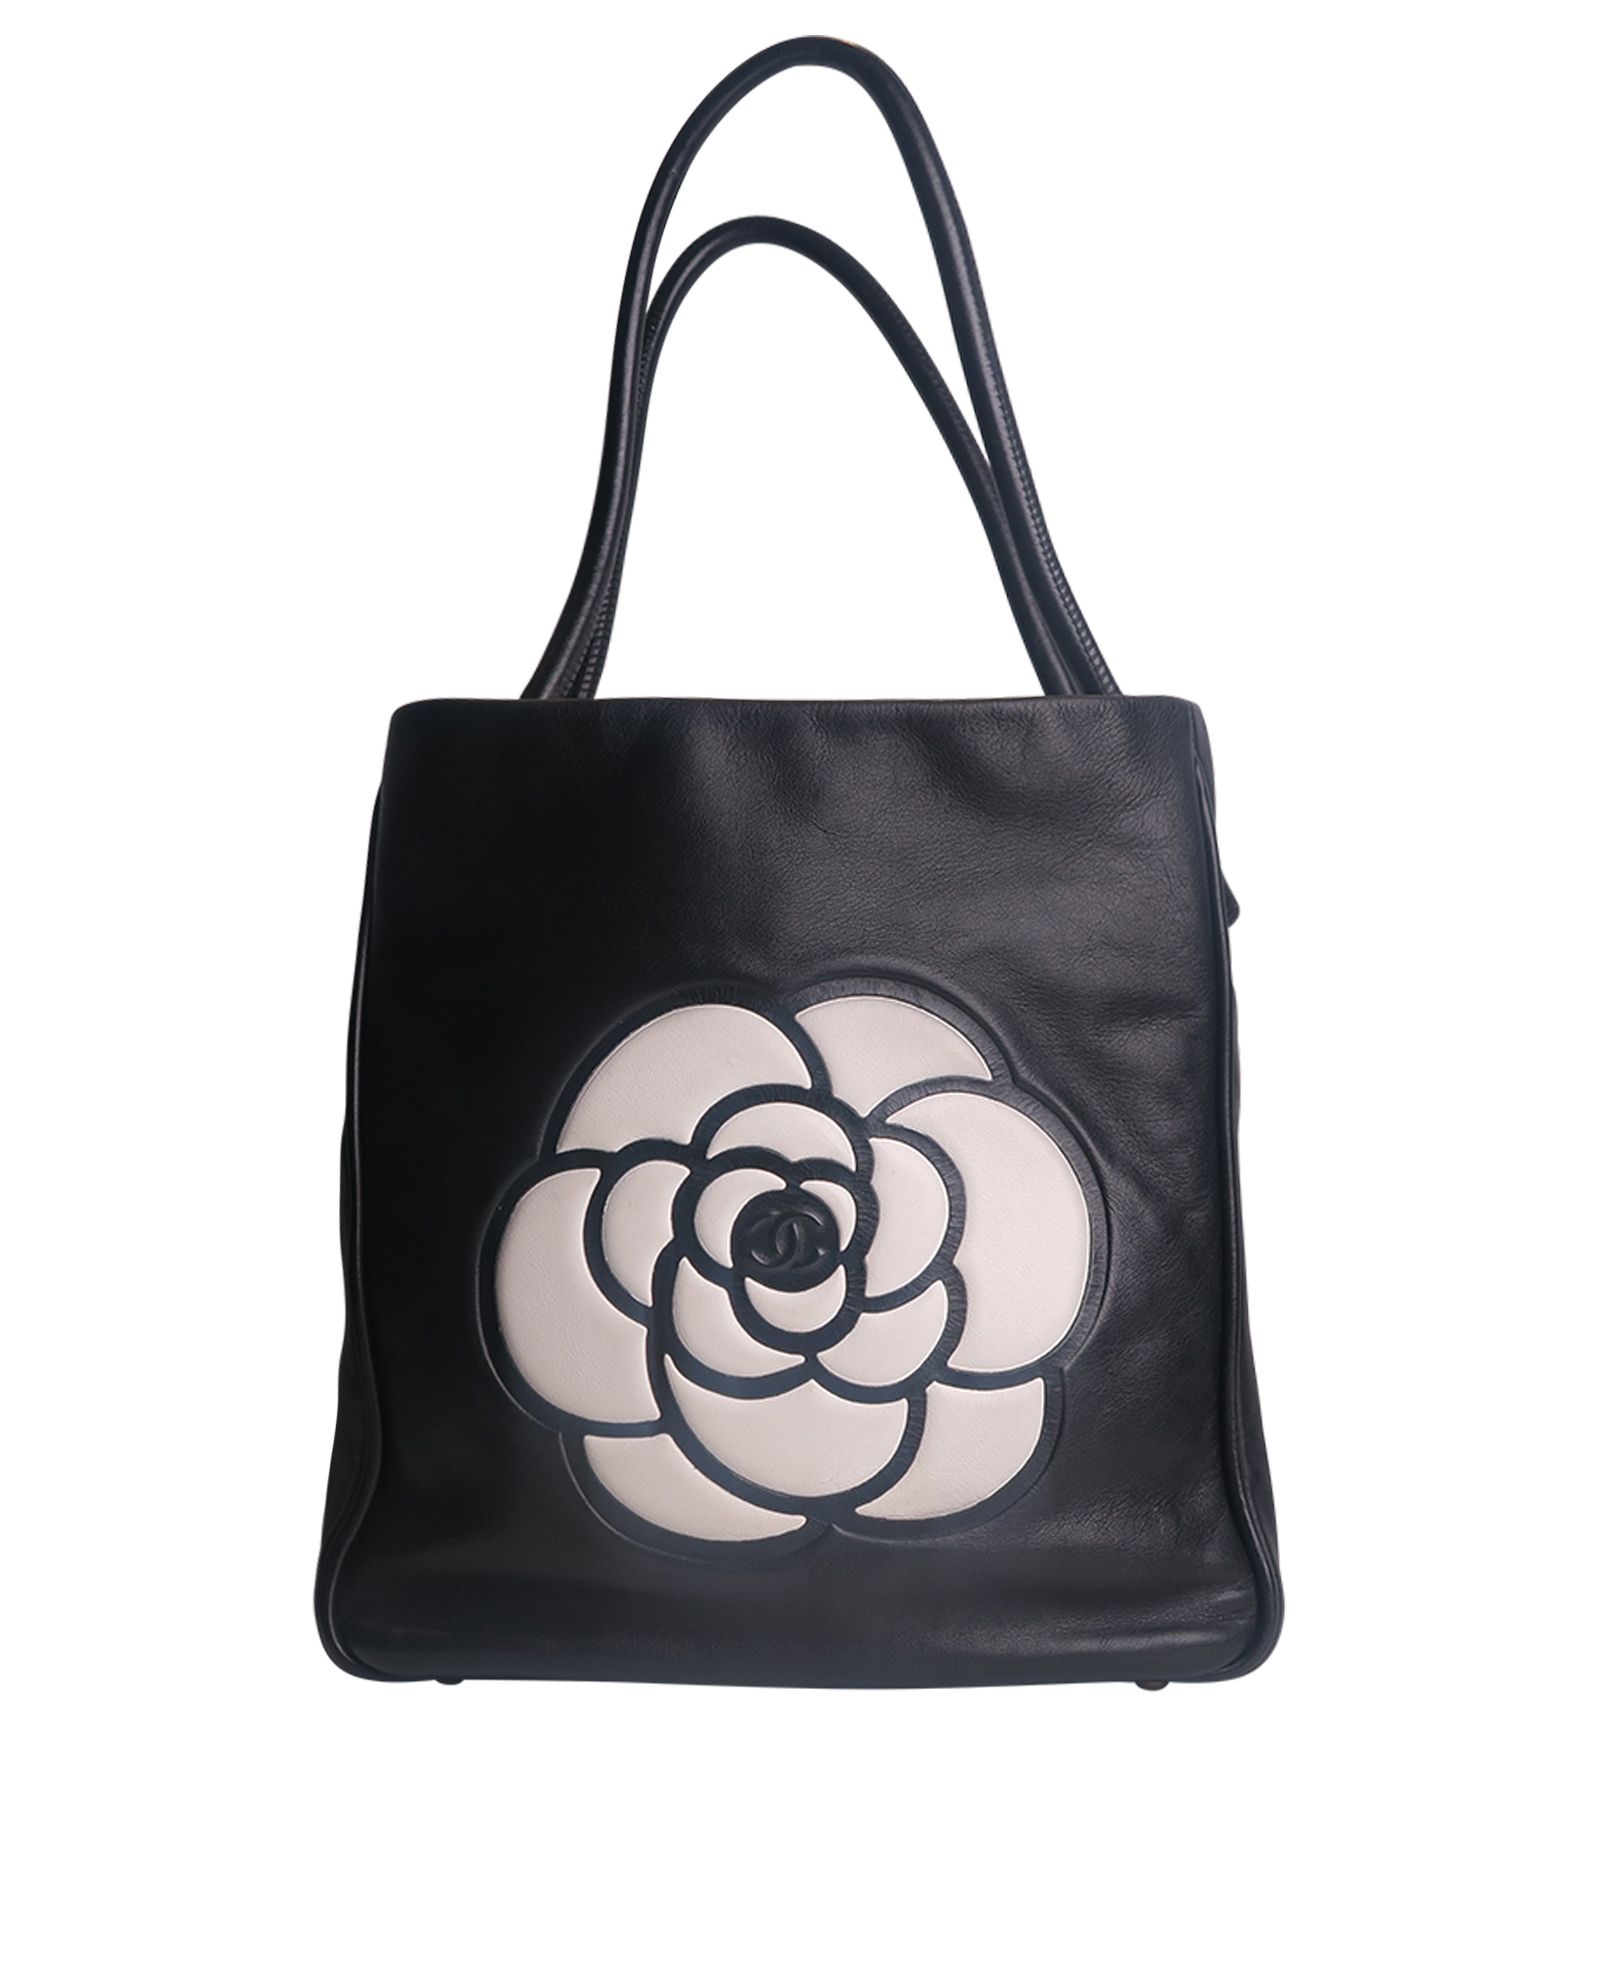 Camellia Tote Bag